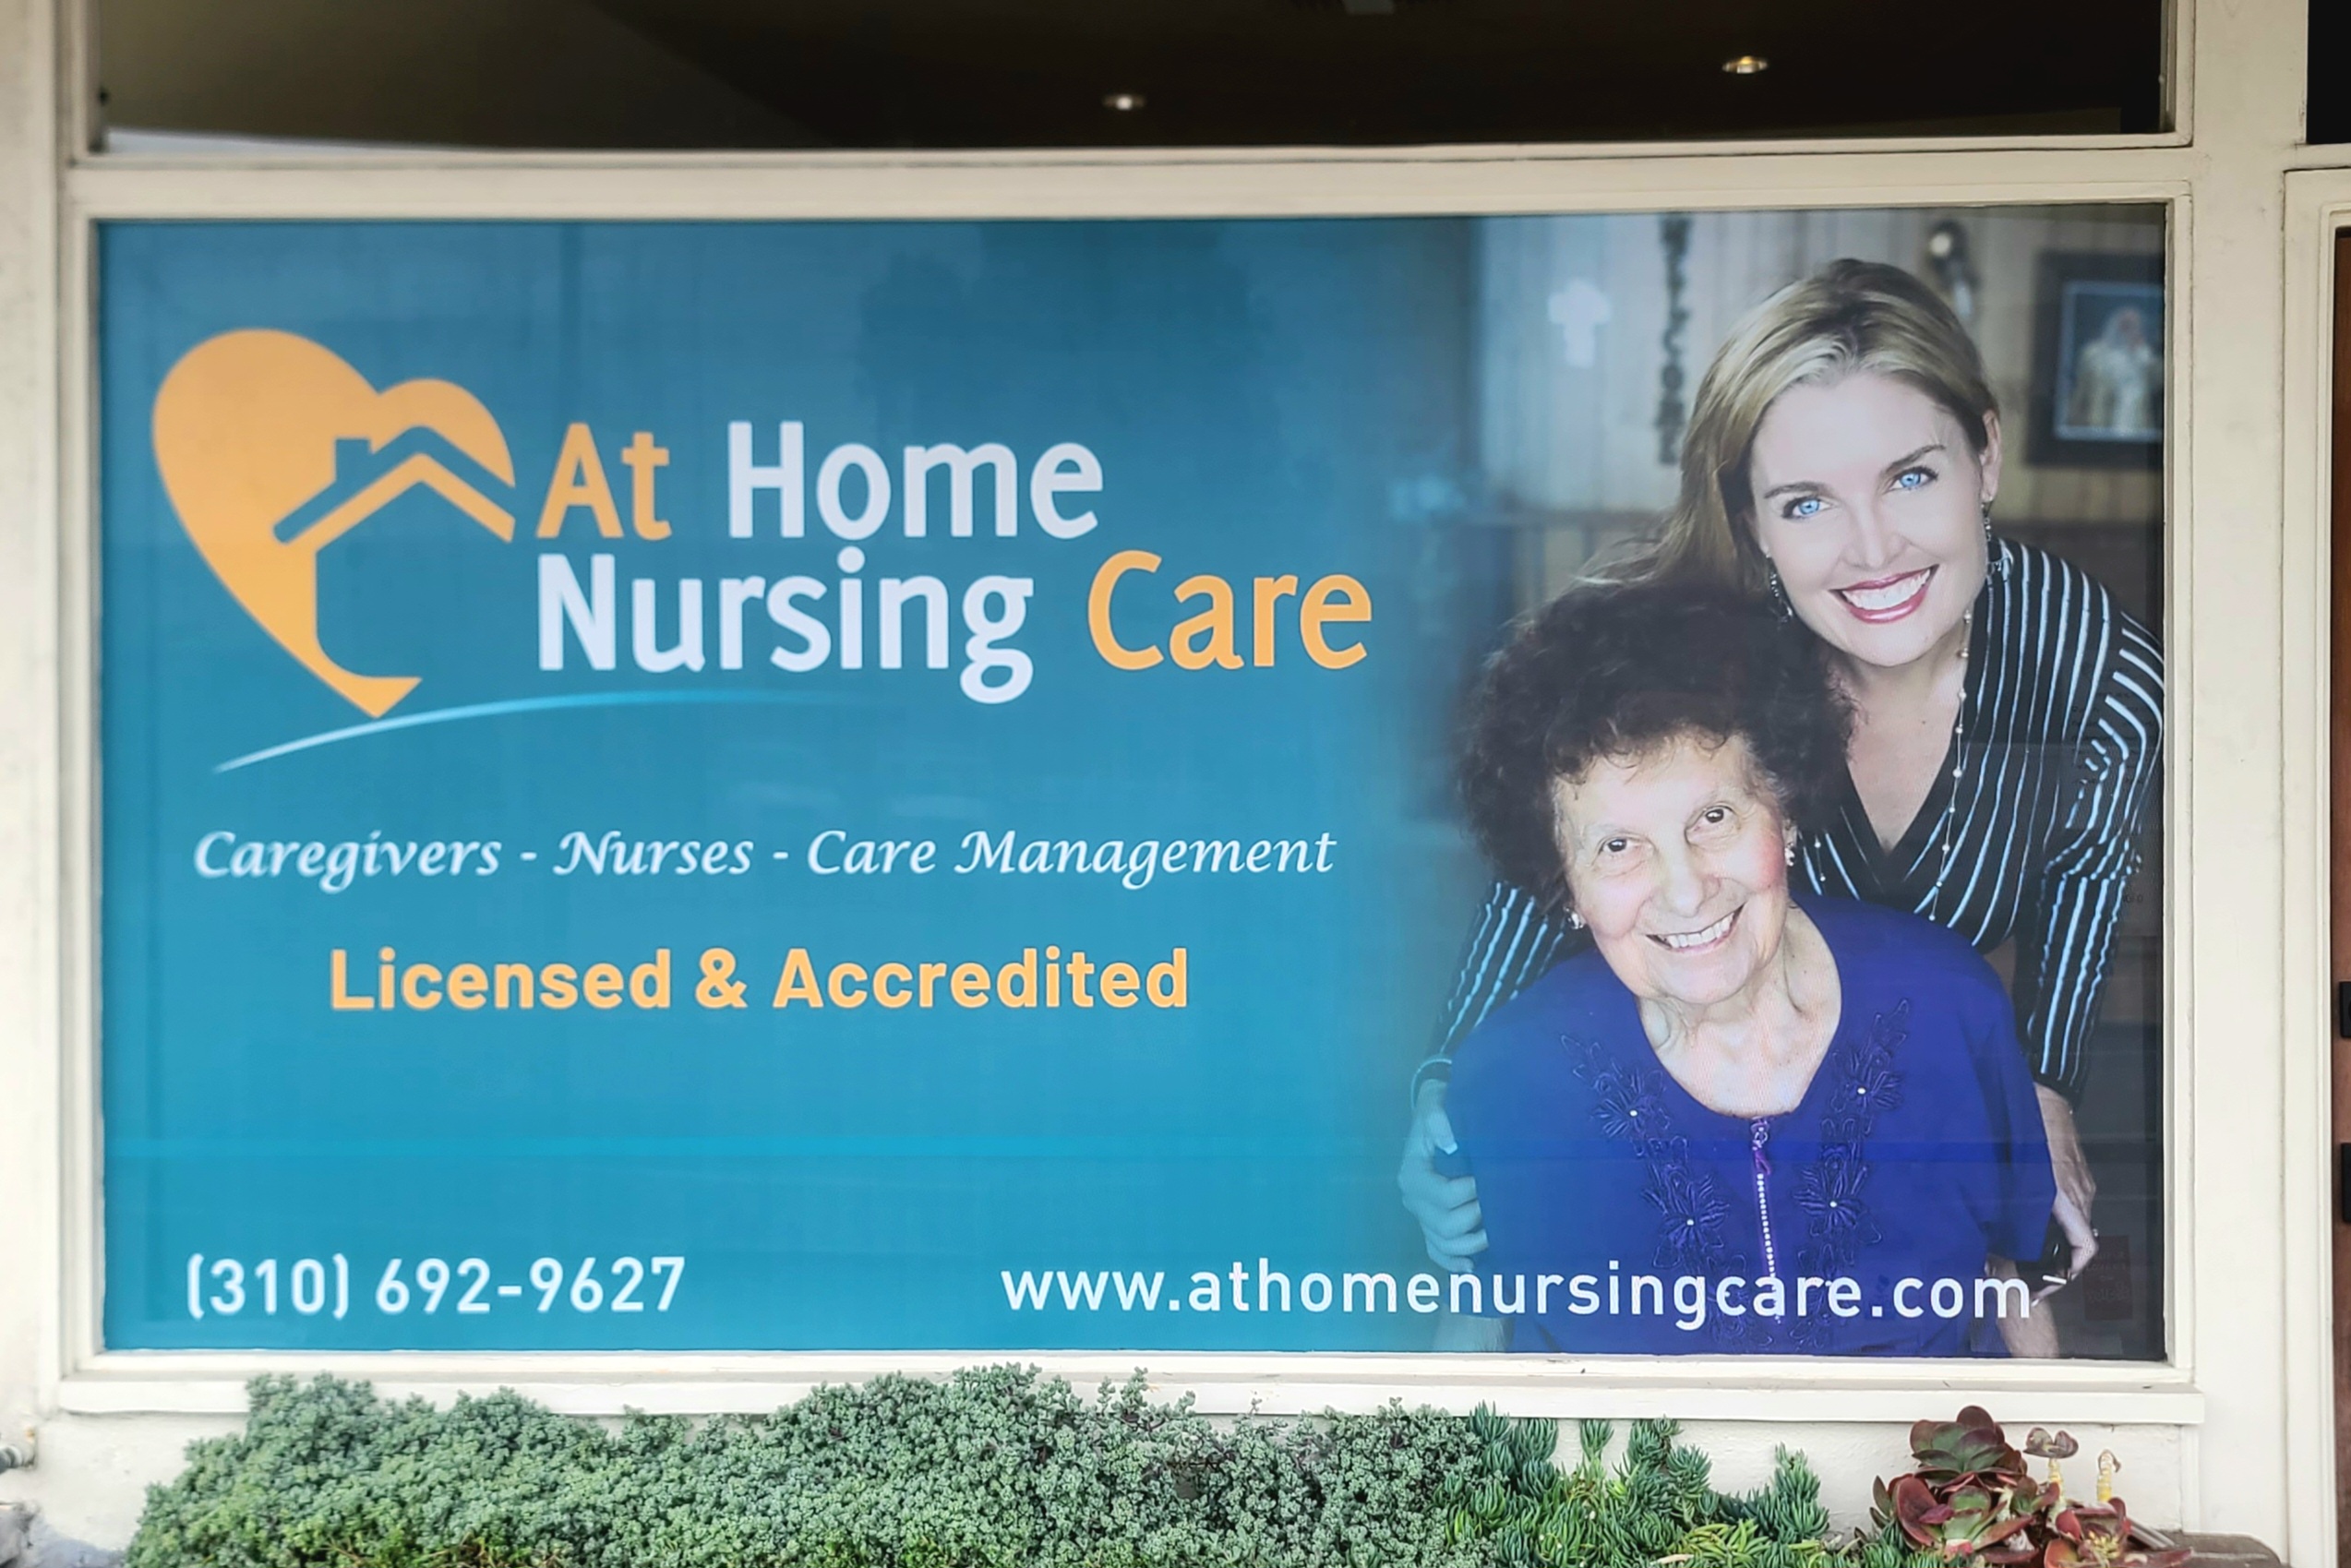 Vibrant Window Graphics: At Home Nursing Culver City's windows adorned with vivid graphics.